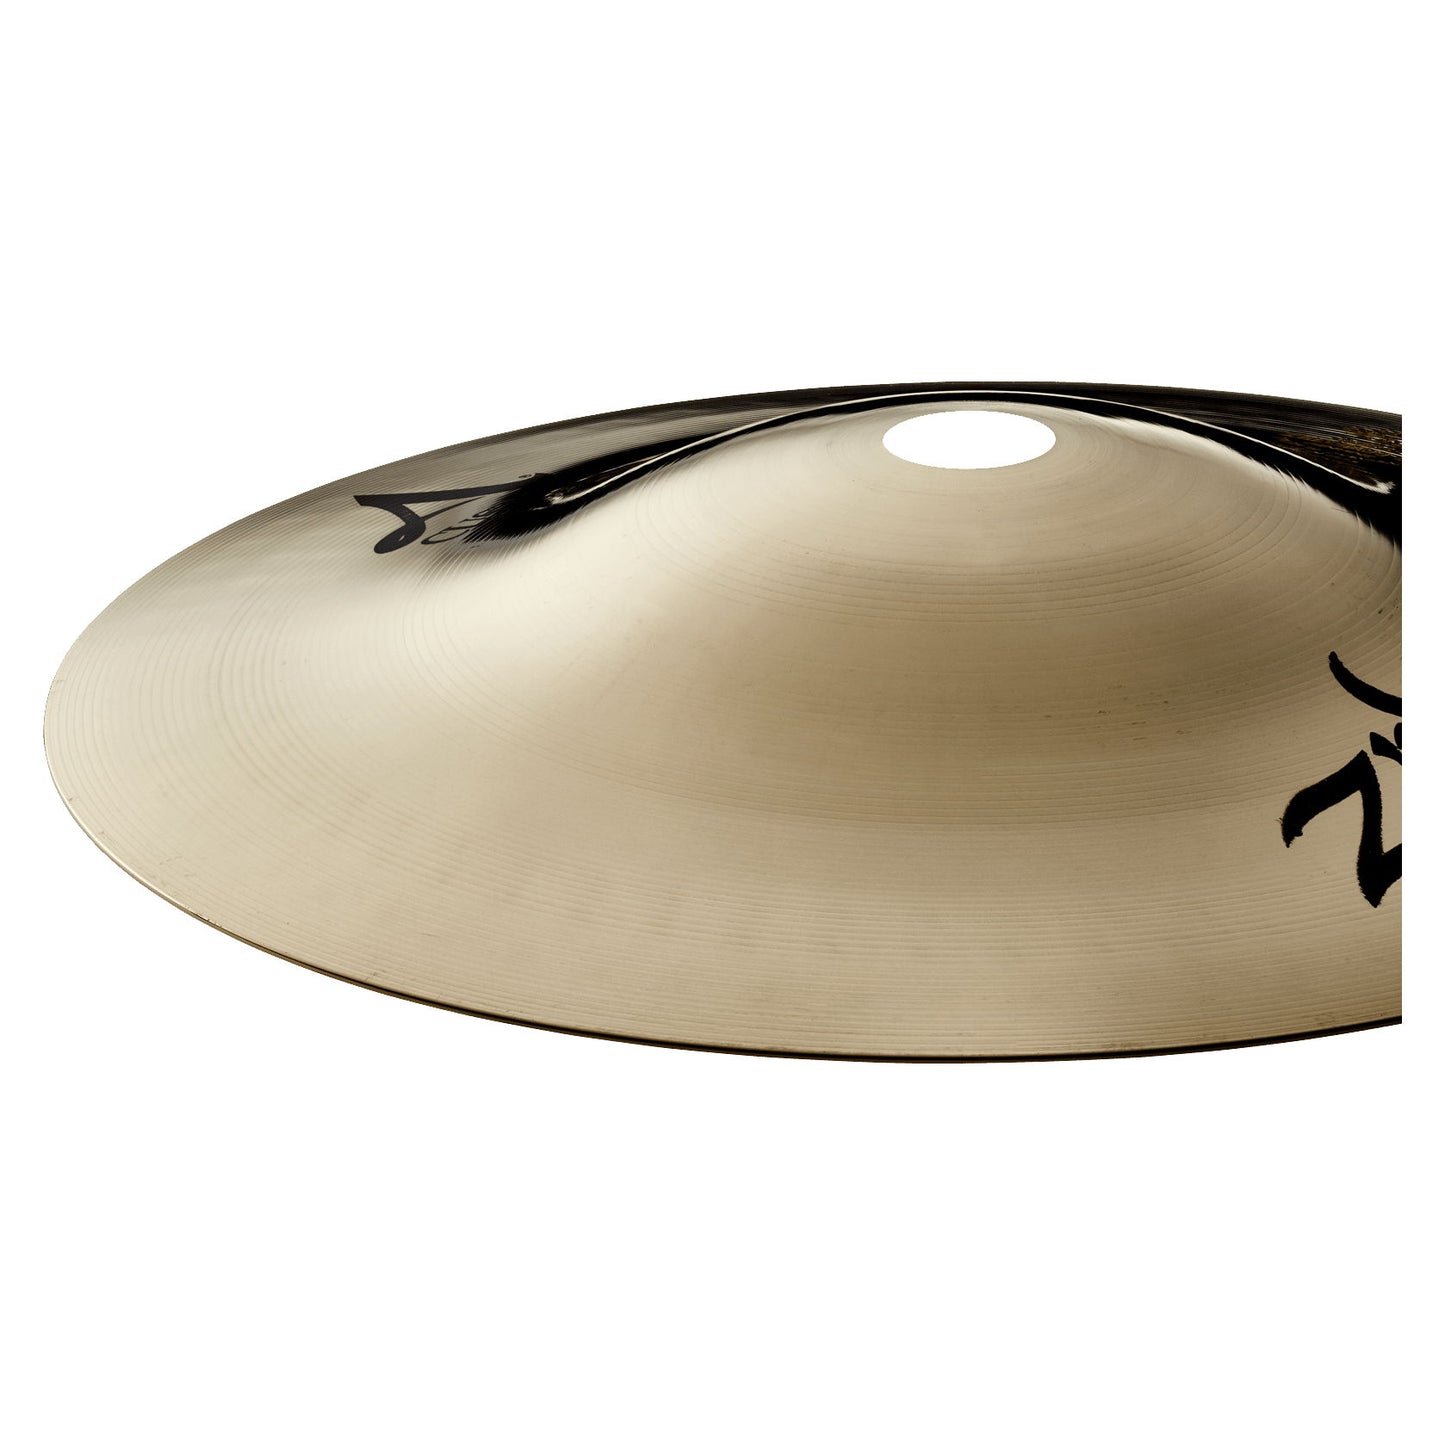 Zildjian 6 Inch A Custom Splash Cymbal